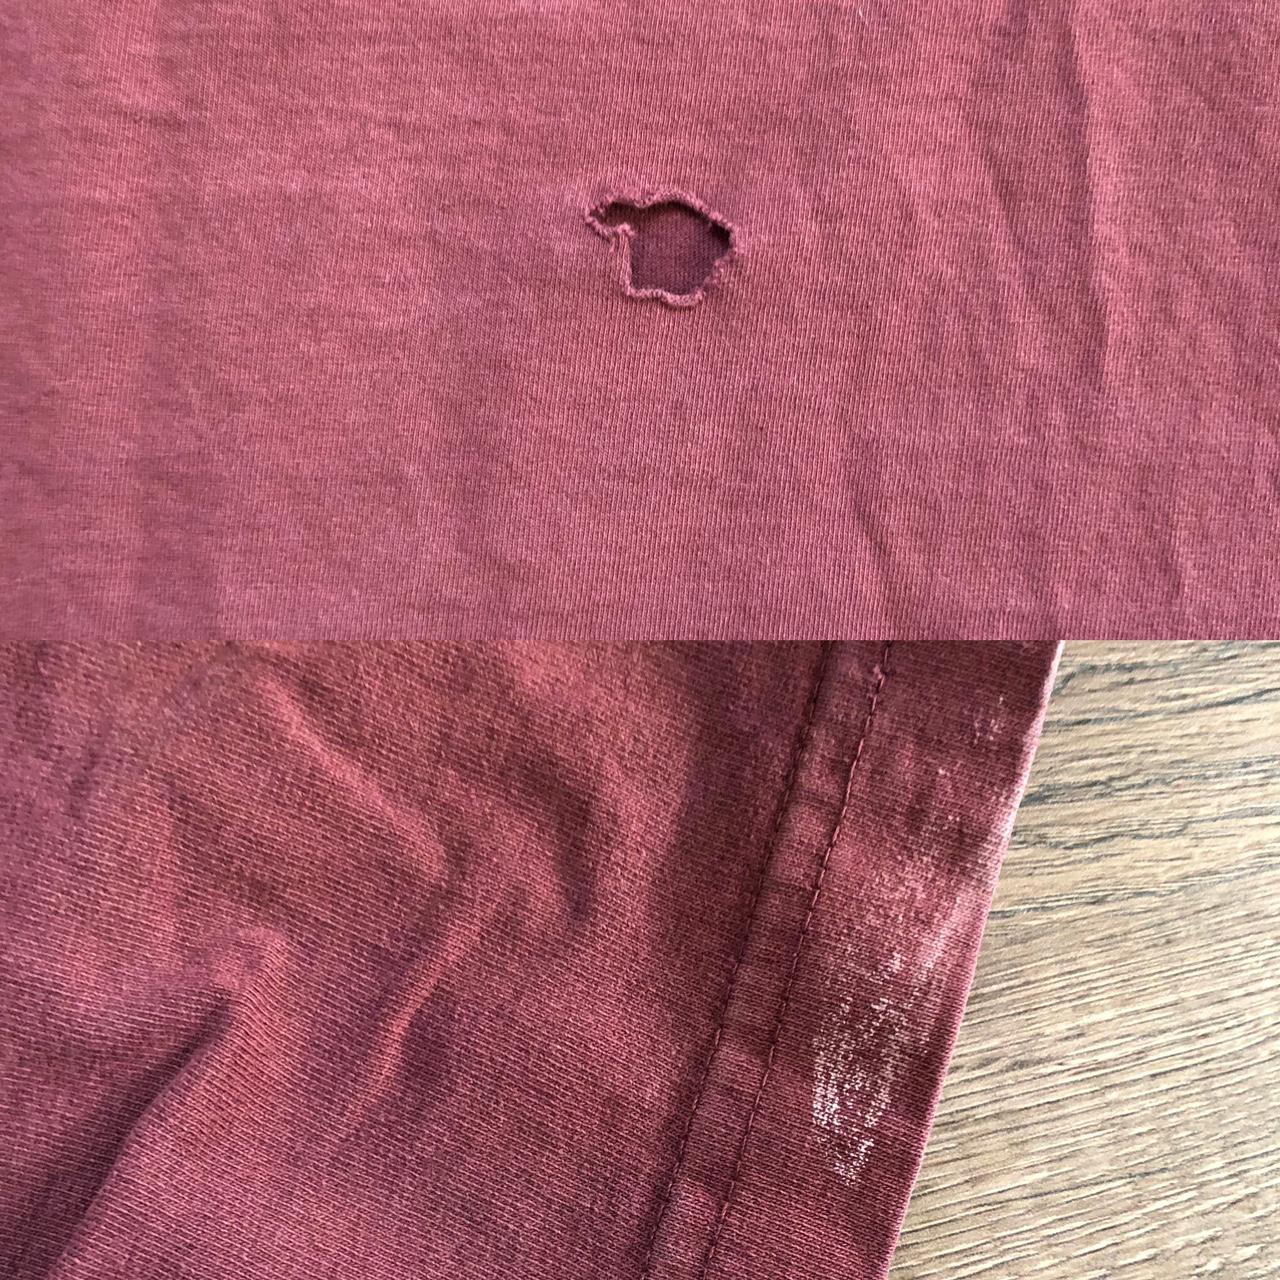 Product Image 4 - 🔥🚧CARHARTT SHIRT🚧🔥
-Nicely worn/distressed Carhartt shirt
-Burgundy/maroon